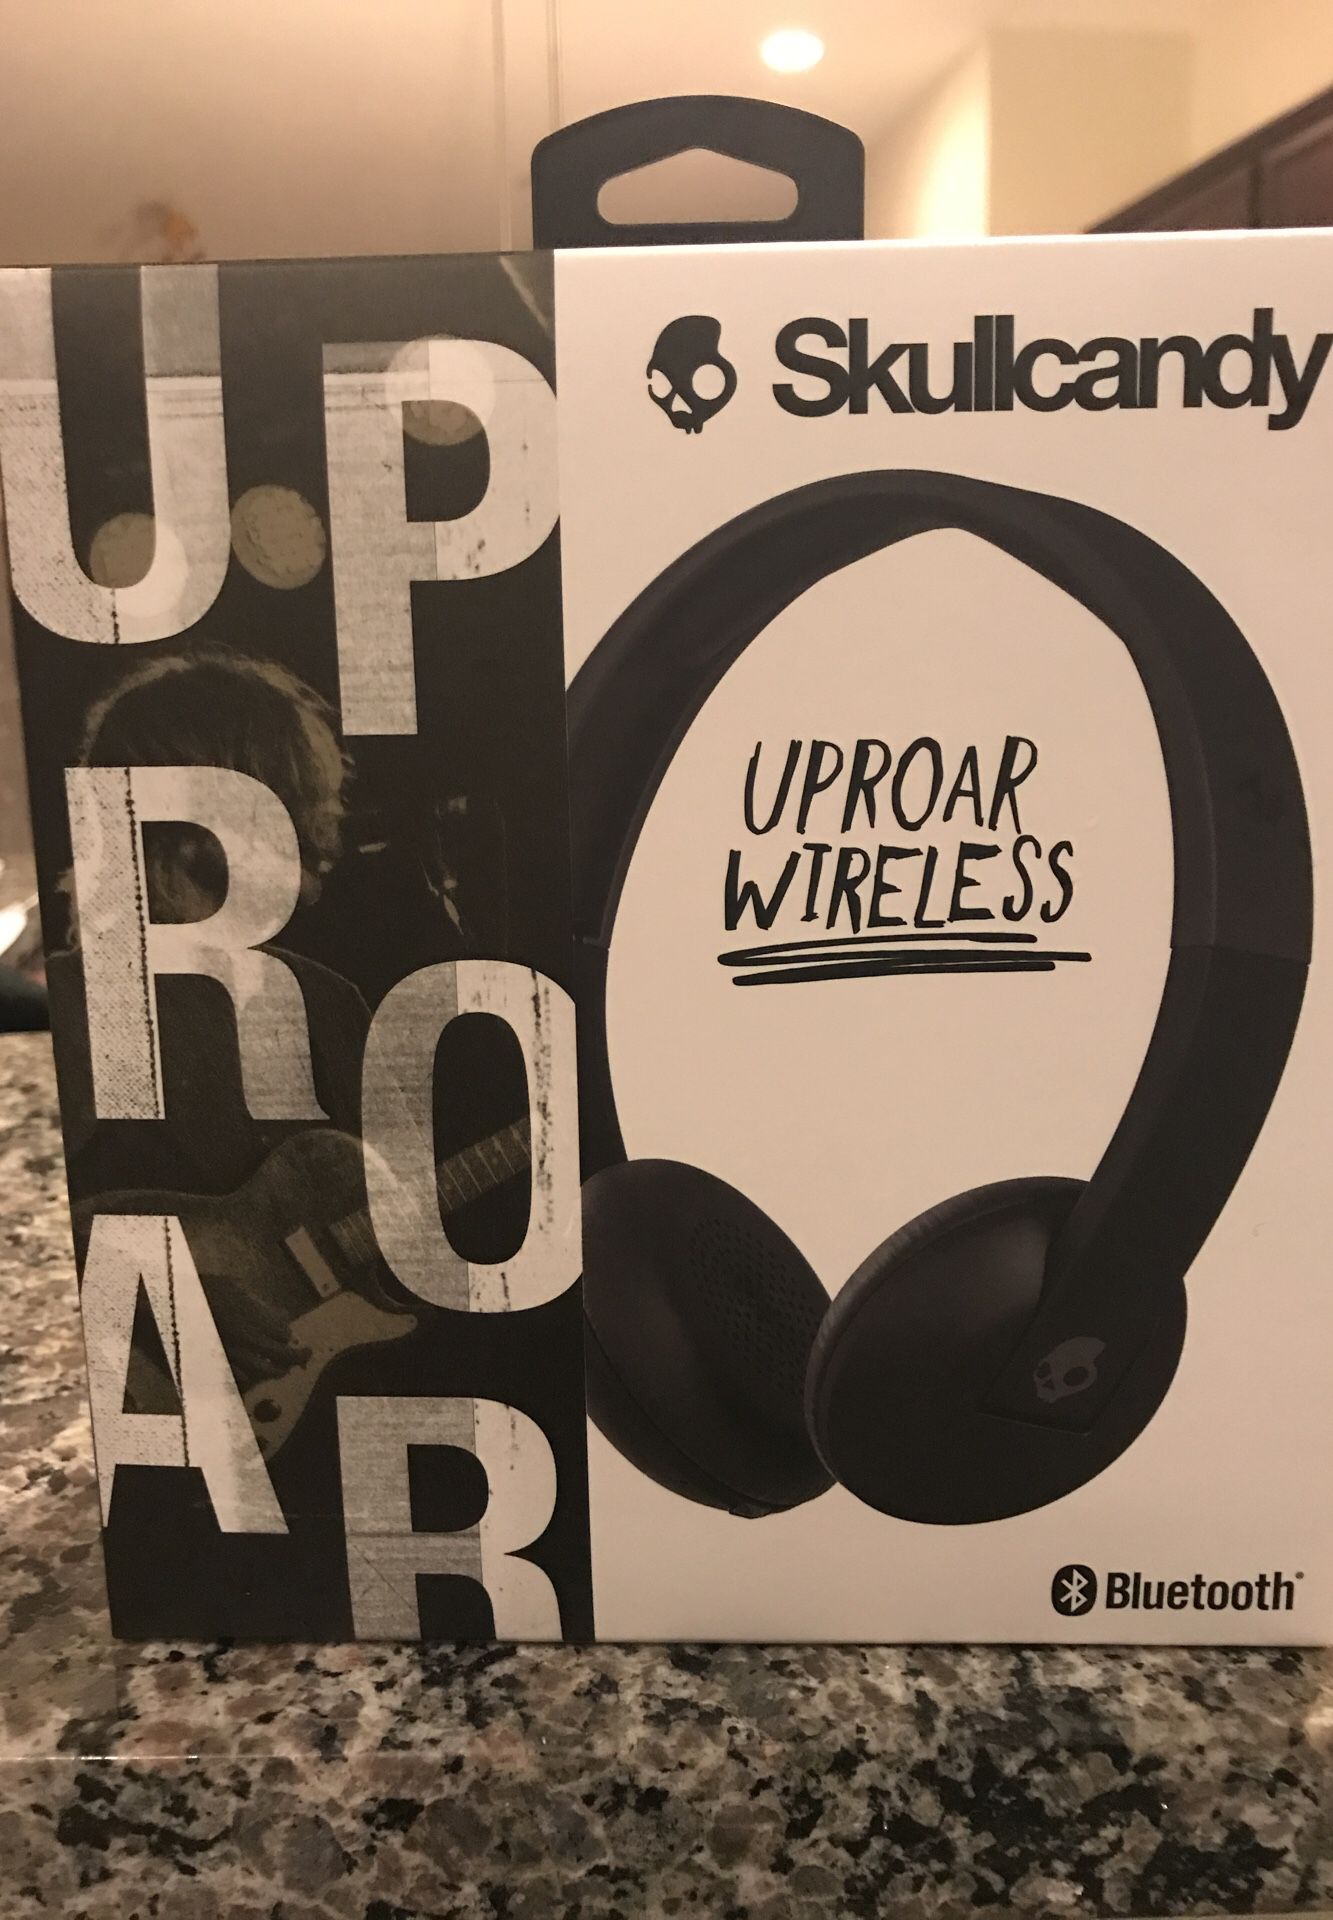 Skullcandy brand new Bluetooth headphones